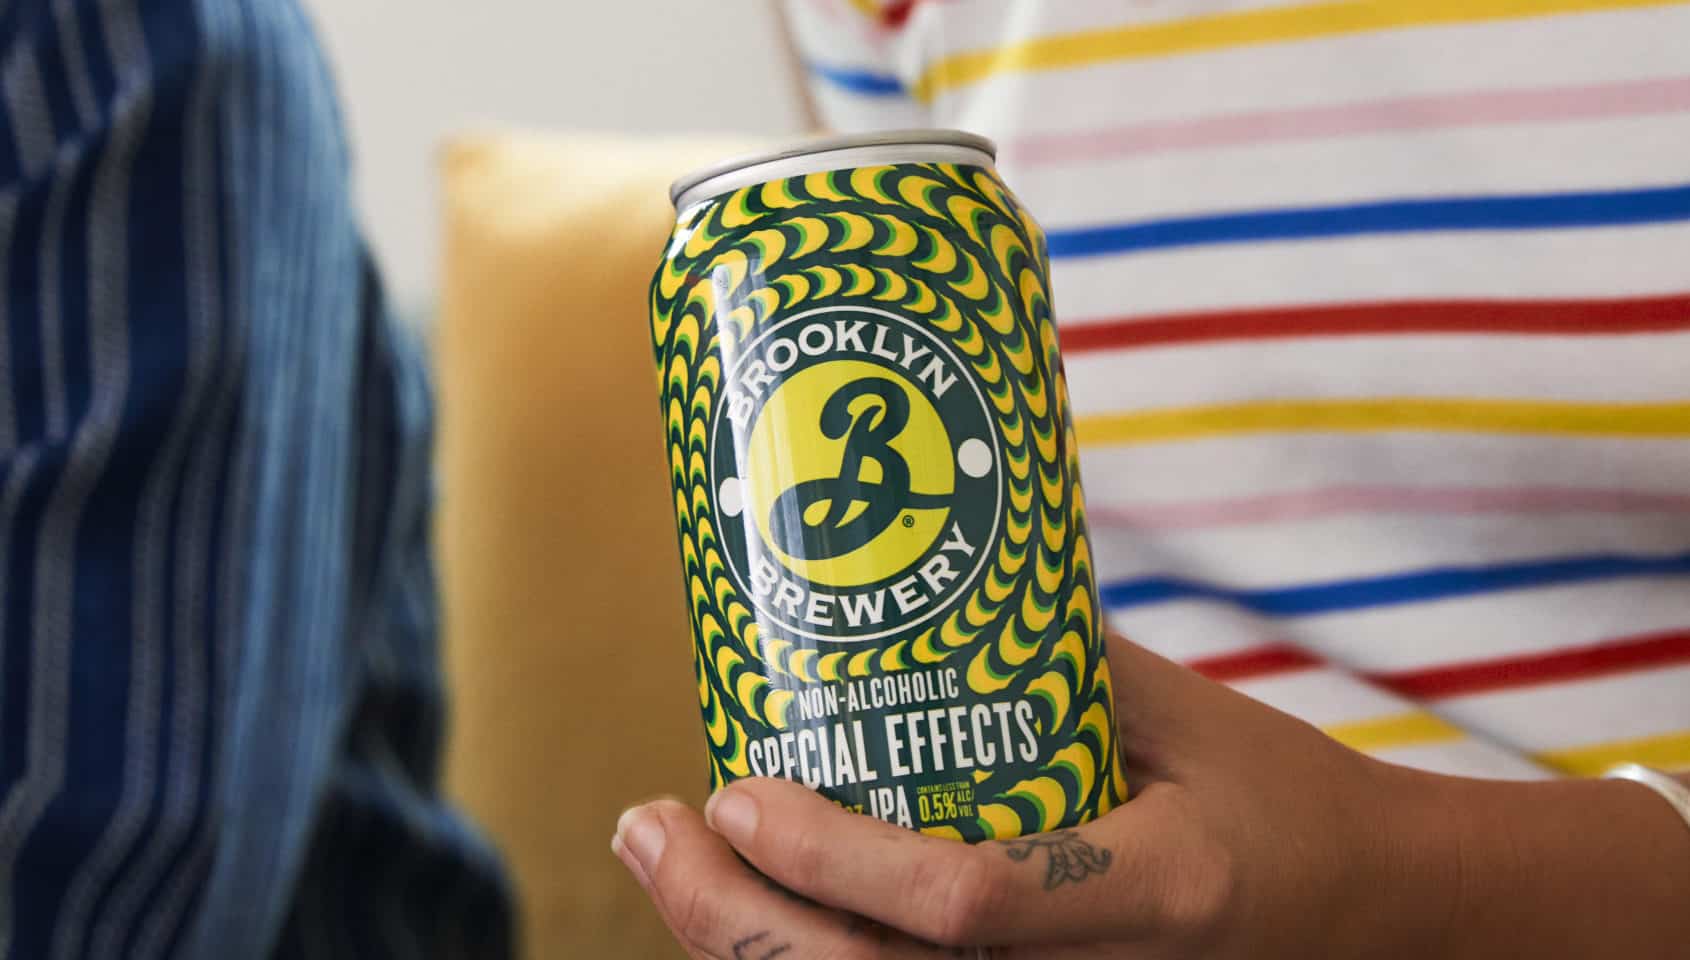 Brooklyn Special Effects IPA 0.4% - Bière sans alcool - Brooklyn Brewery